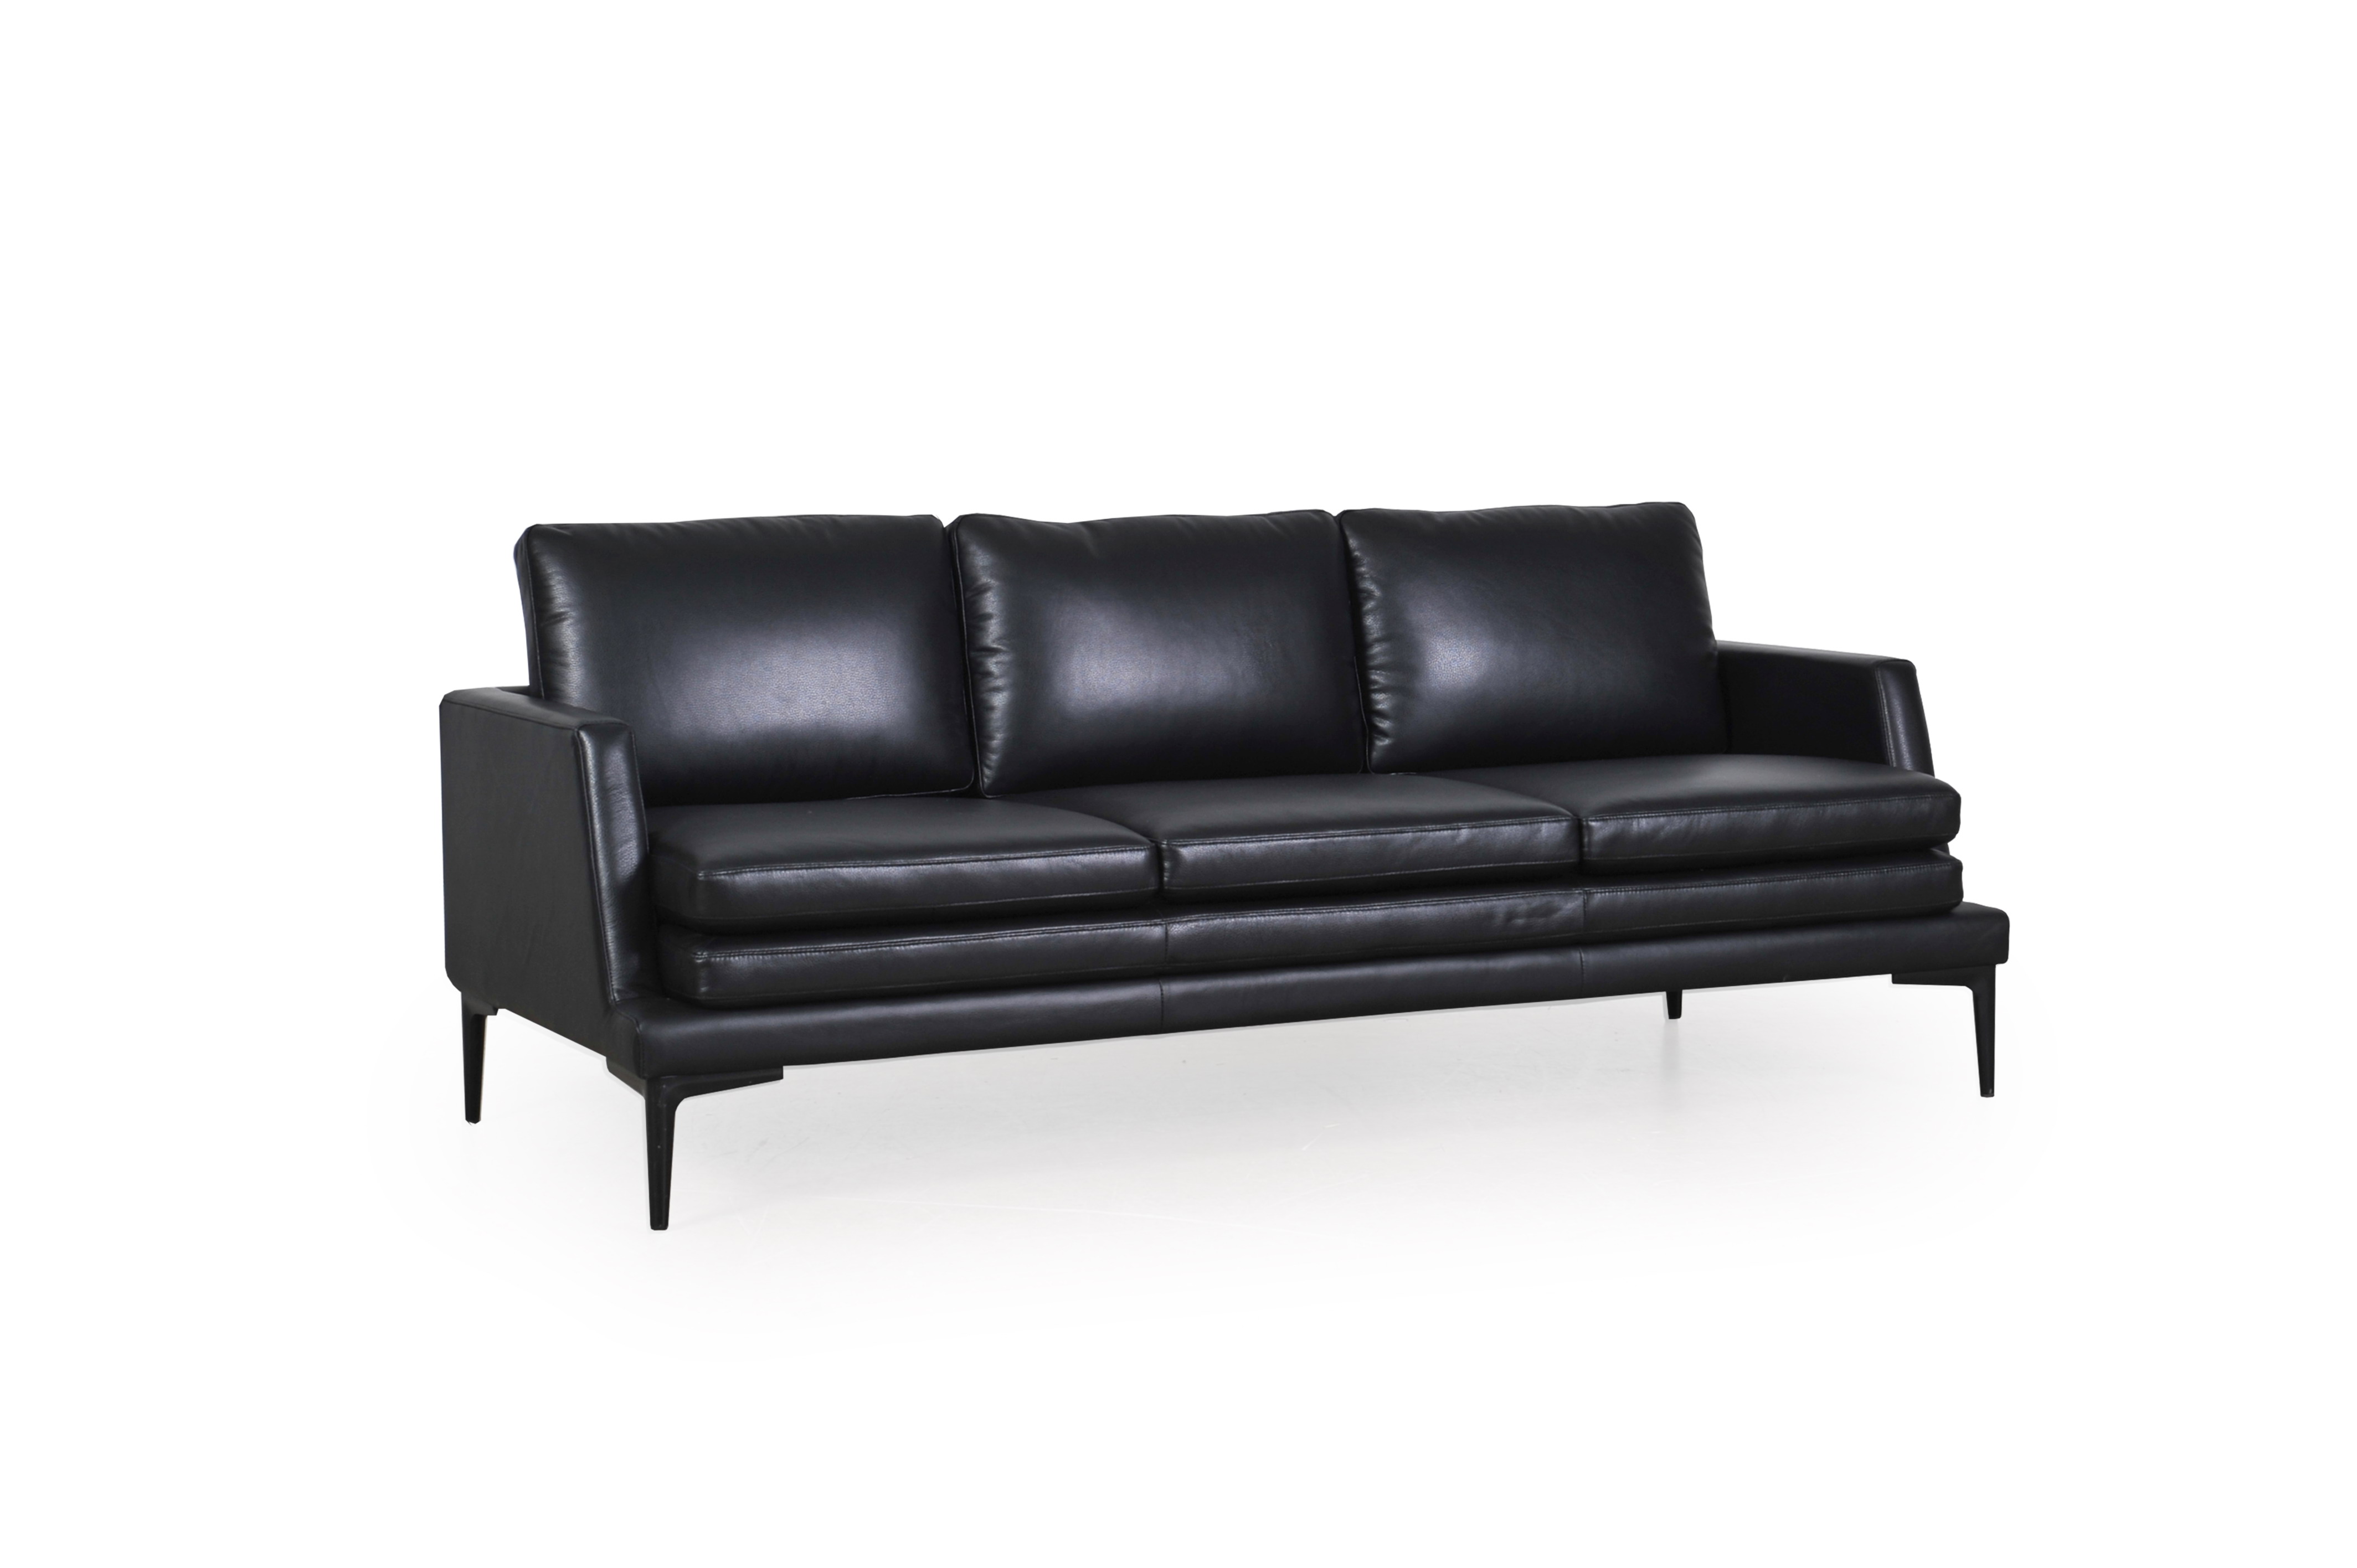 Moroni Rica Black Leather Sofa The, Moroni Leather Furniture